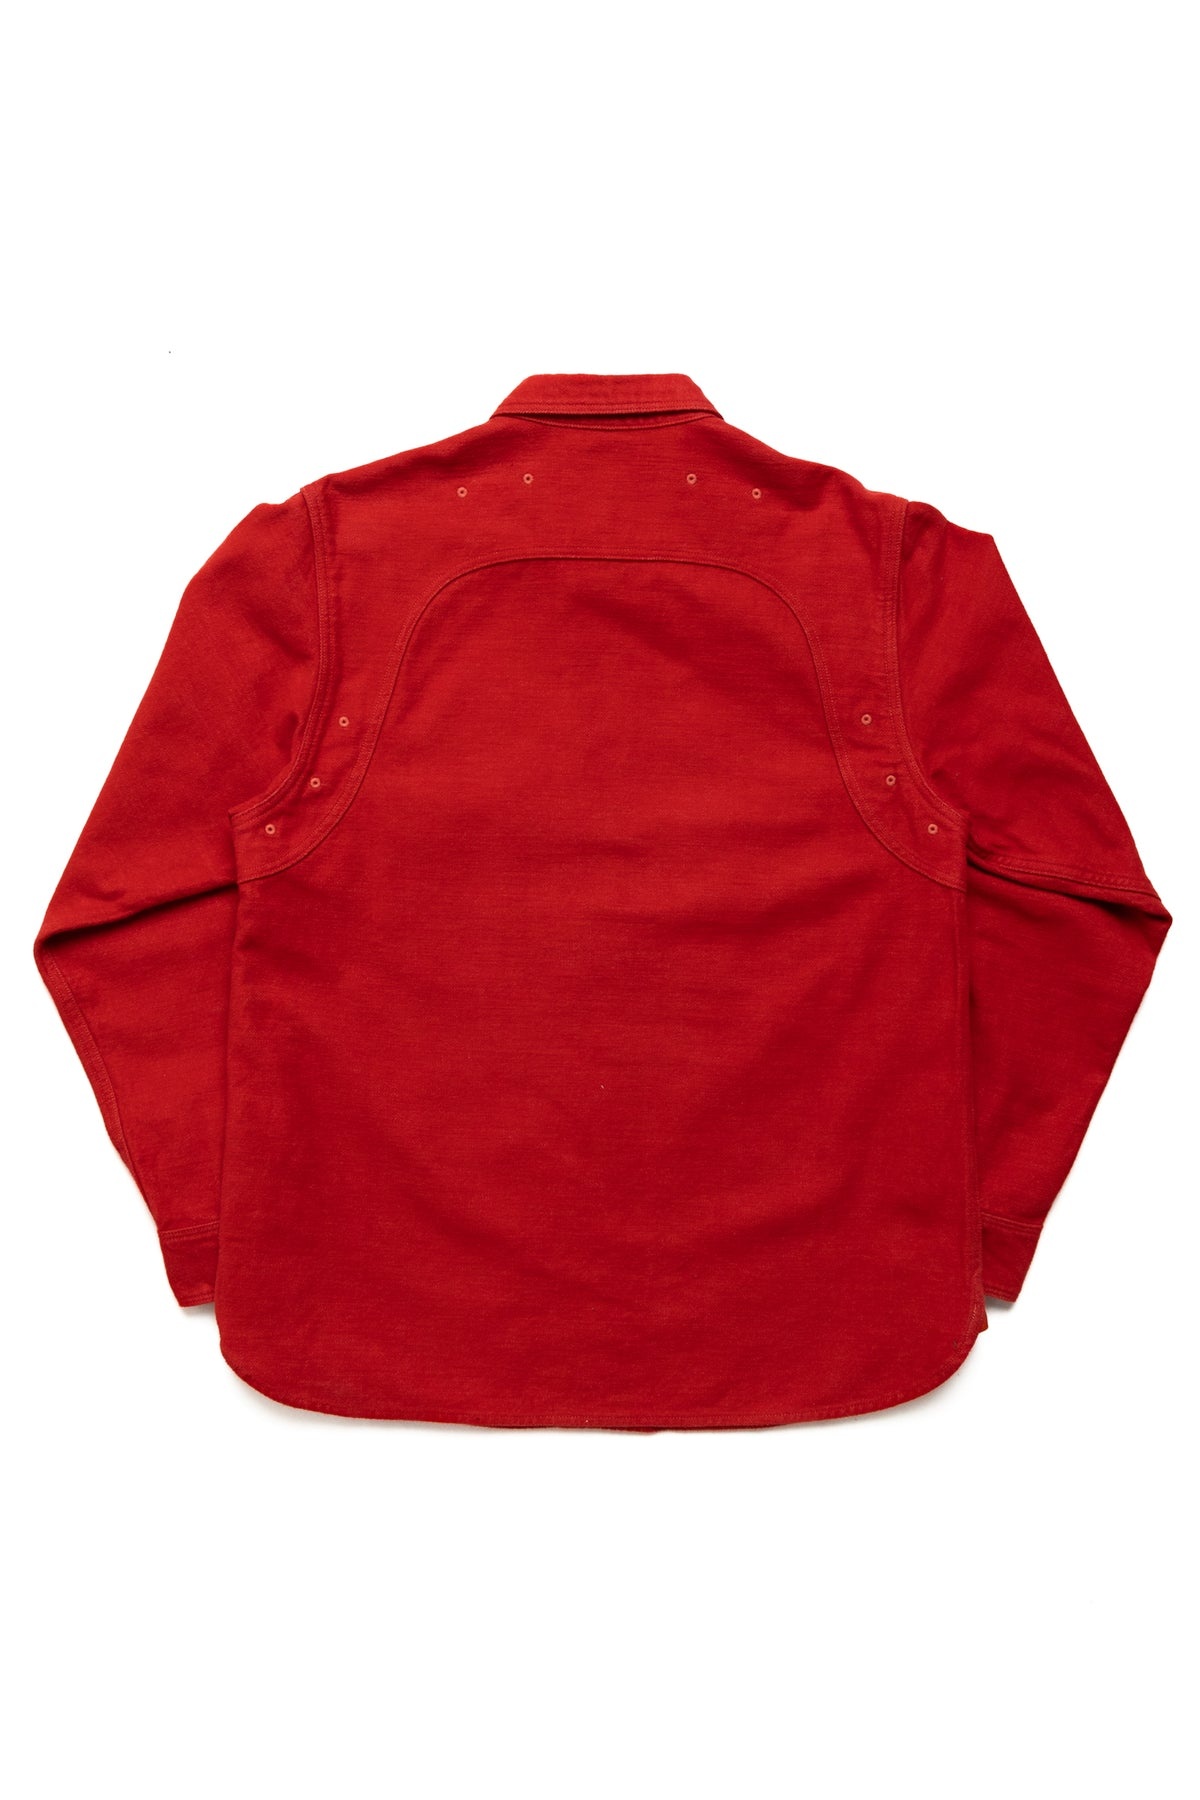 CPO Cotton Wool MOPAR Shirt - Red - 3